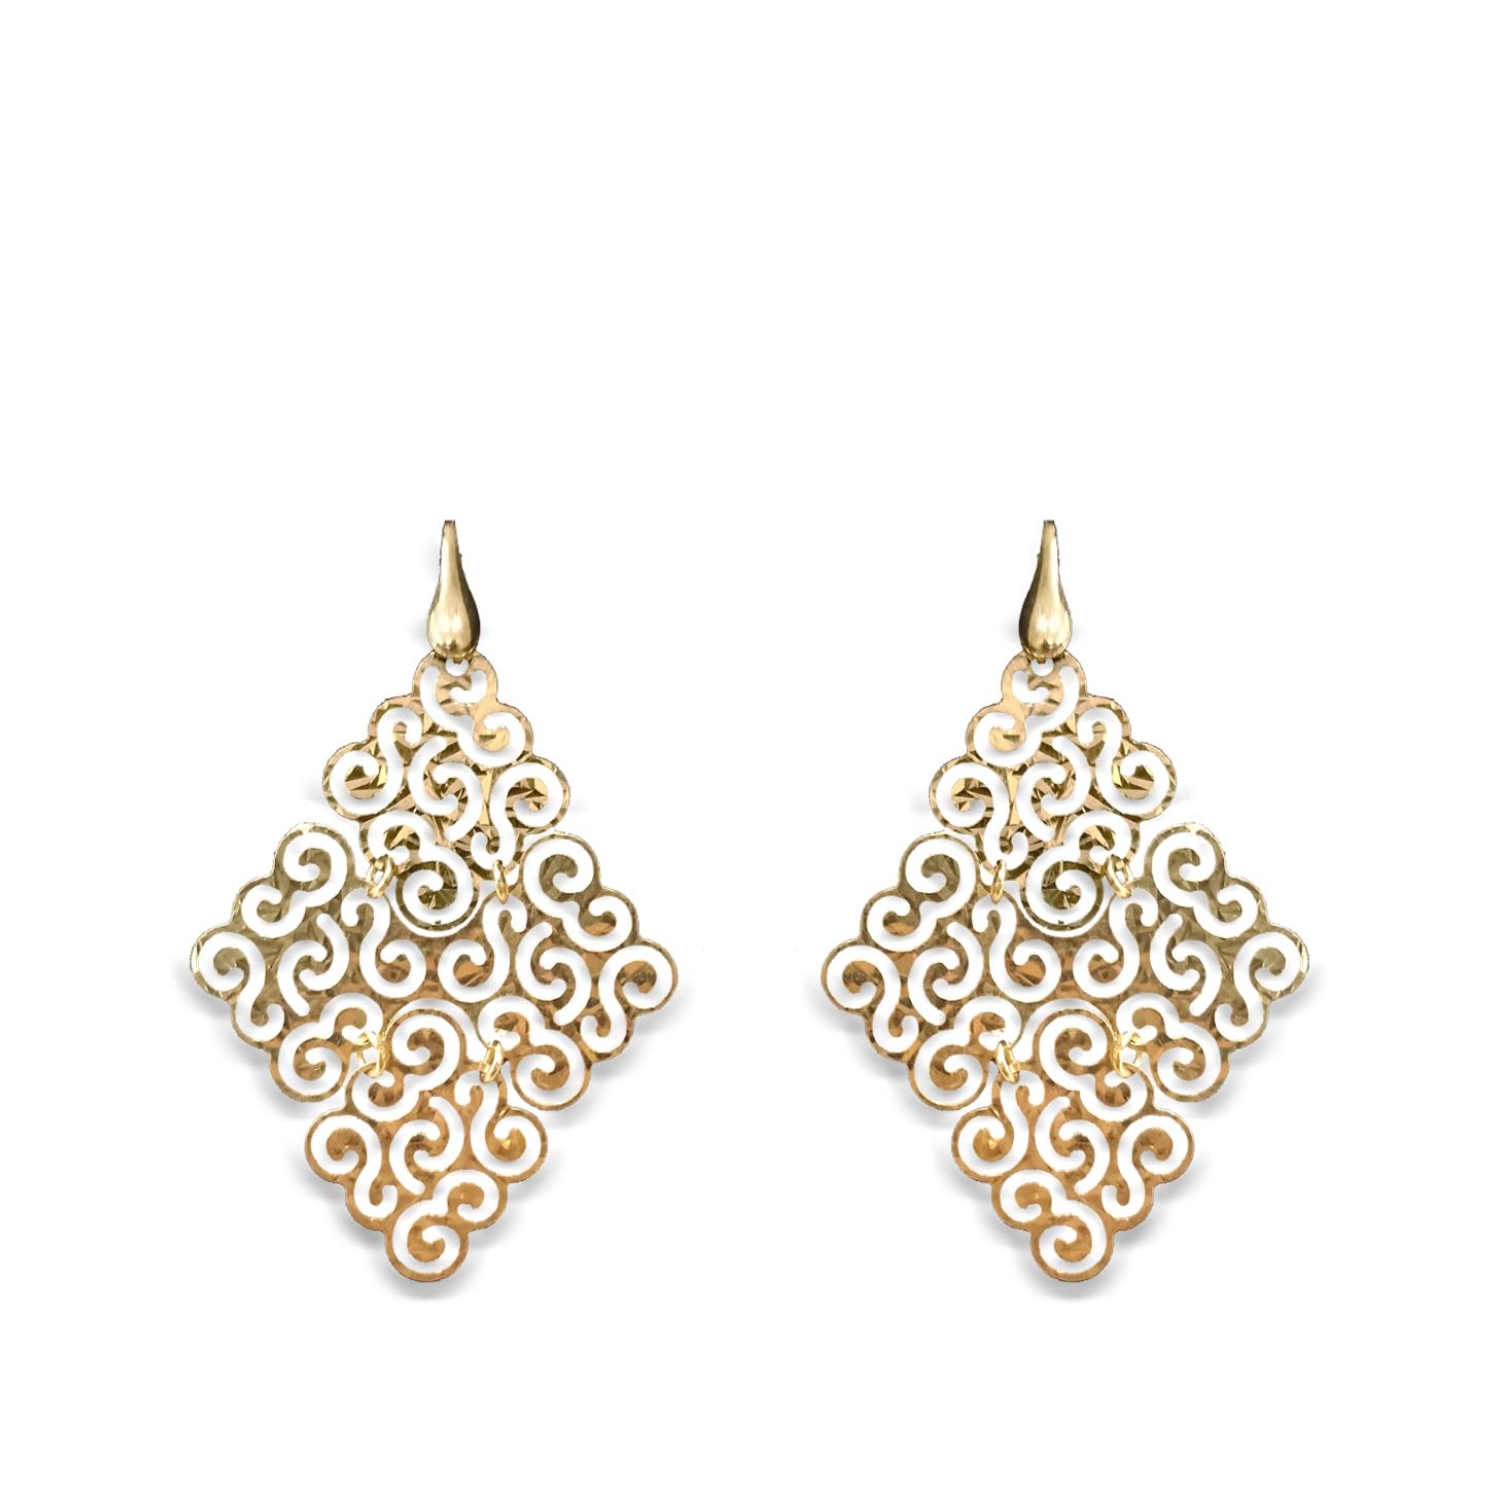 Look glamorous with fine Italian jewelry designs francofontanajewellery  italianjewelry design newcollection gold style earrings  Instagram